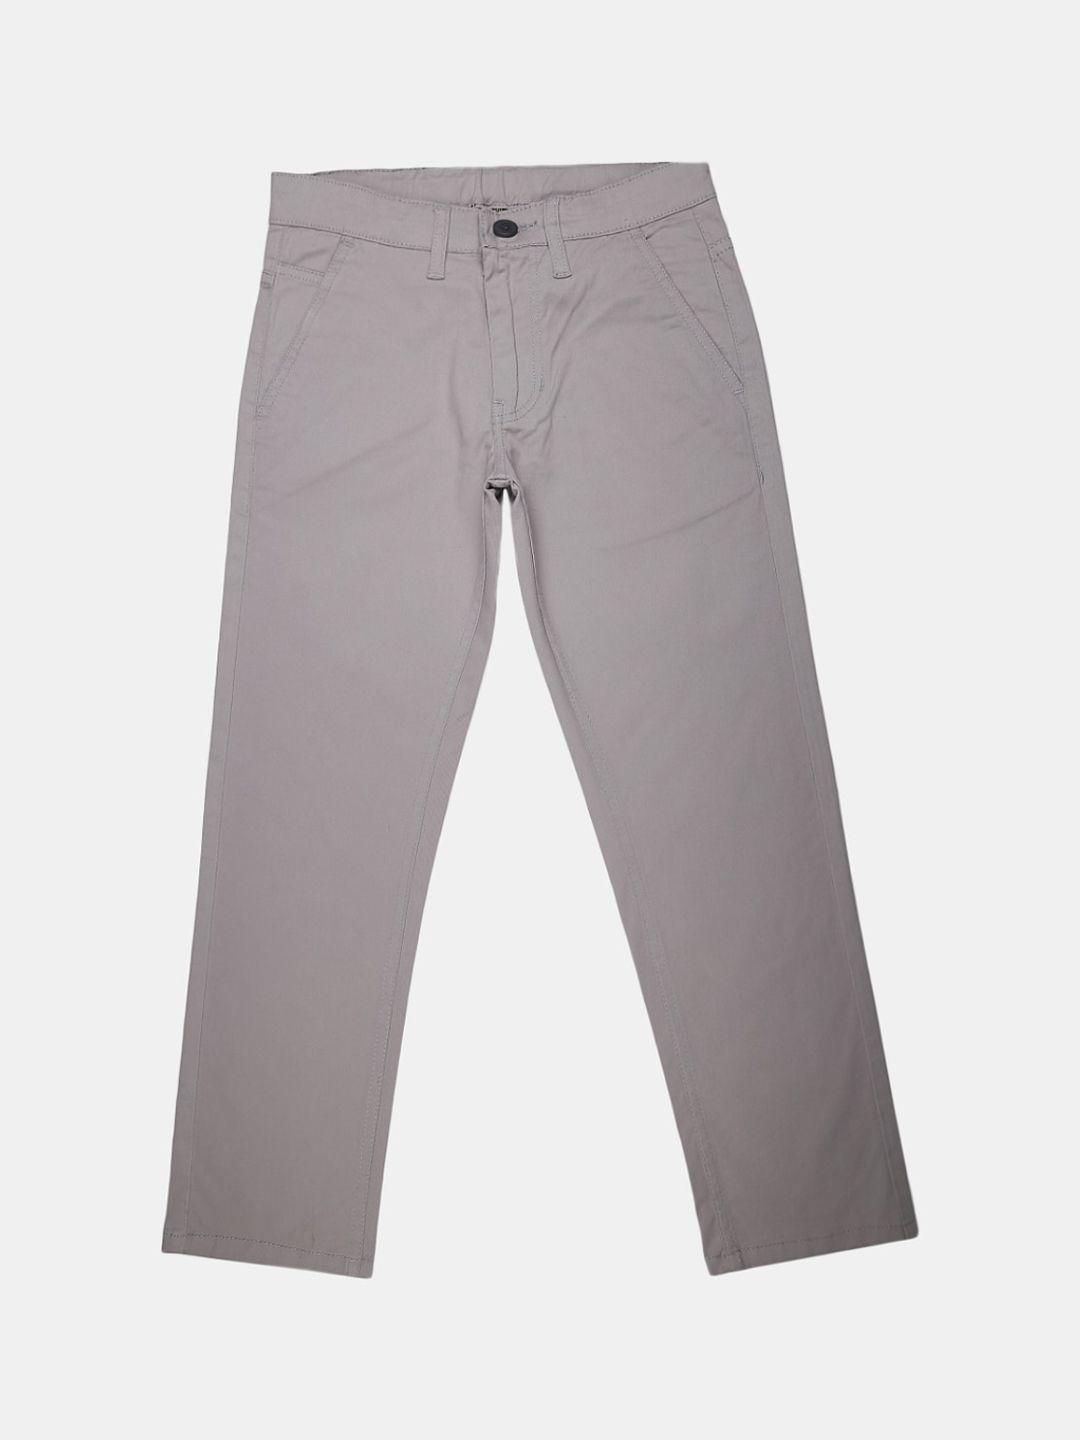 v-mart boys classic fit cotton trousers